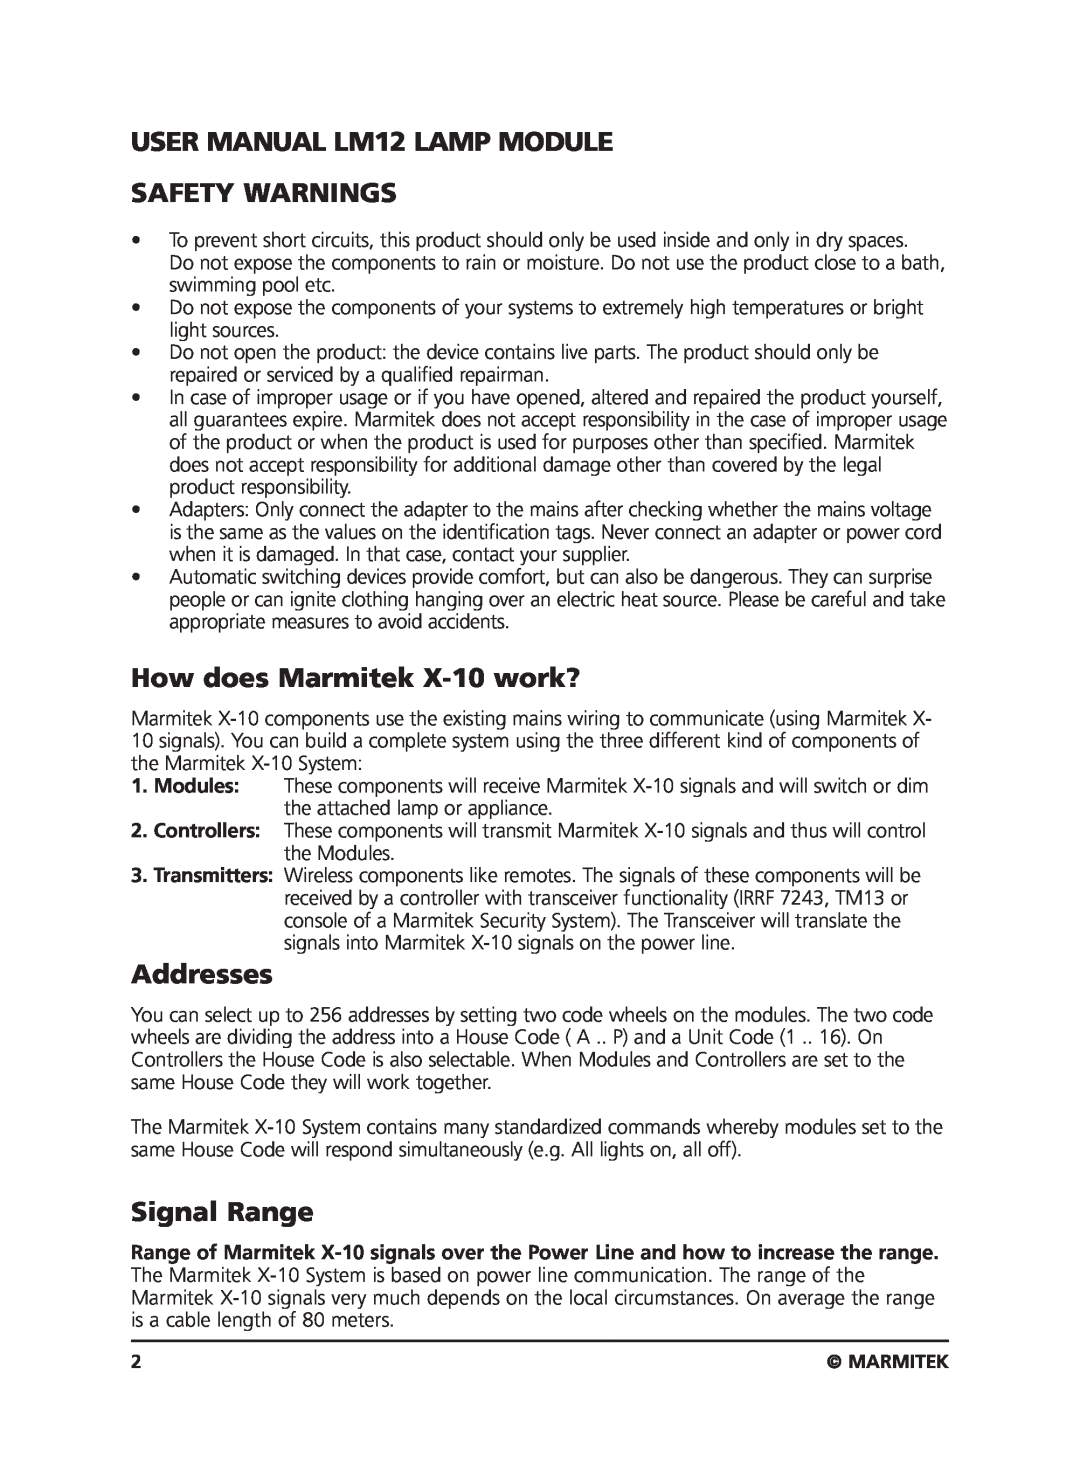 Marmitek LM12 user manual How does Marmitek X-10work?, Addresses, Signal Range 